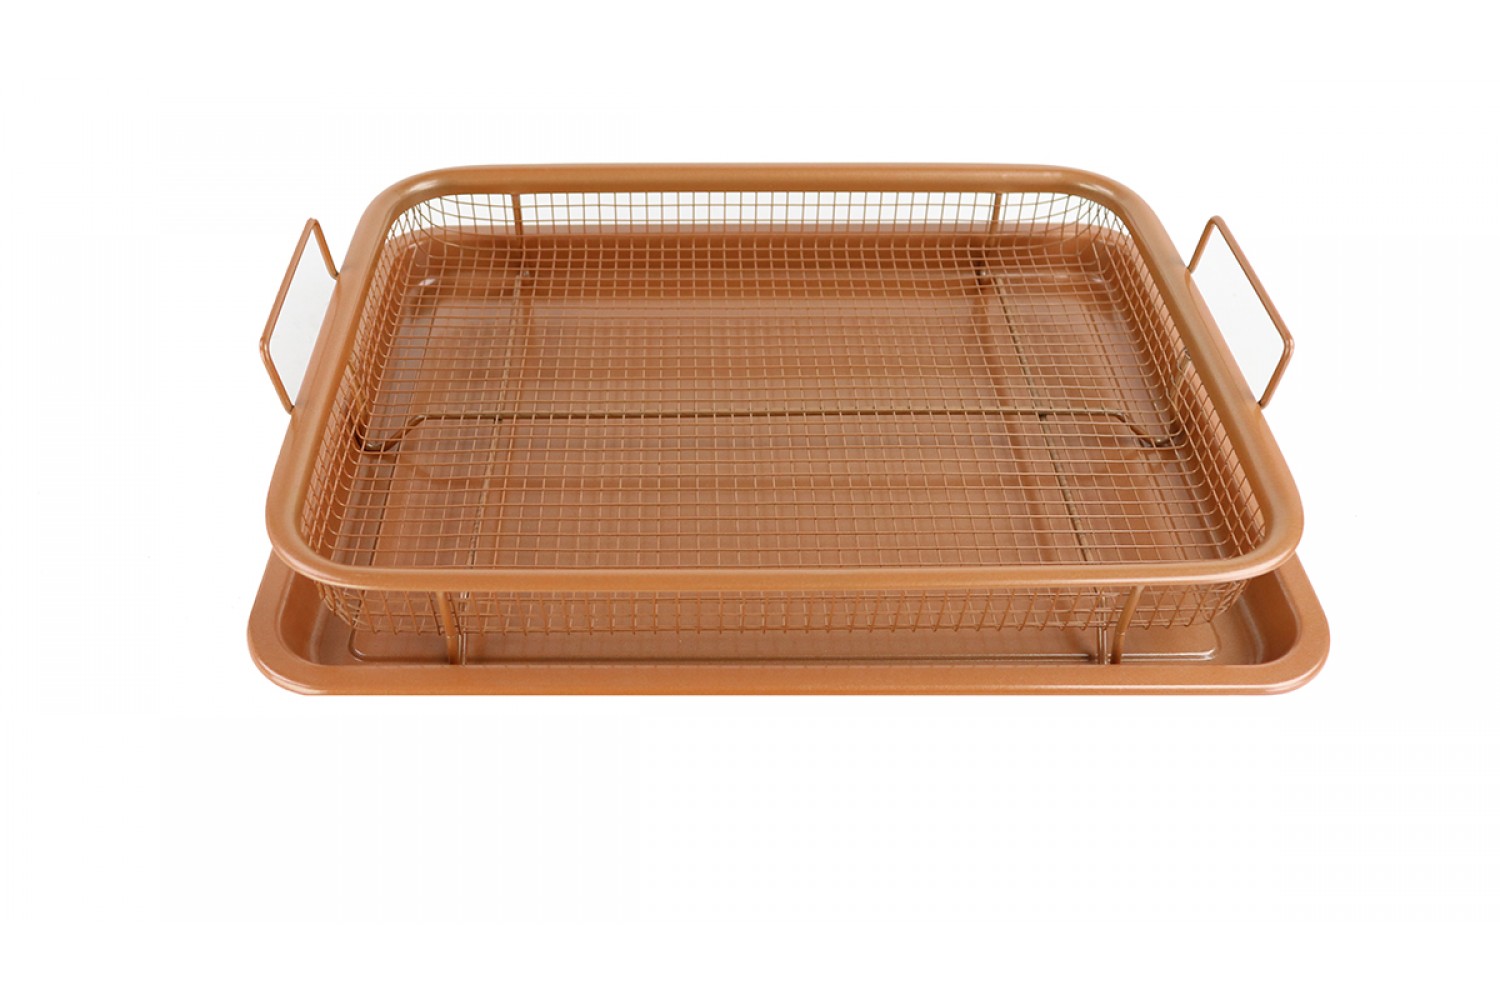 Copper Crisper Oven Air Fryer – Non Stick Crisper Tray Copper Basket Air  Fryer